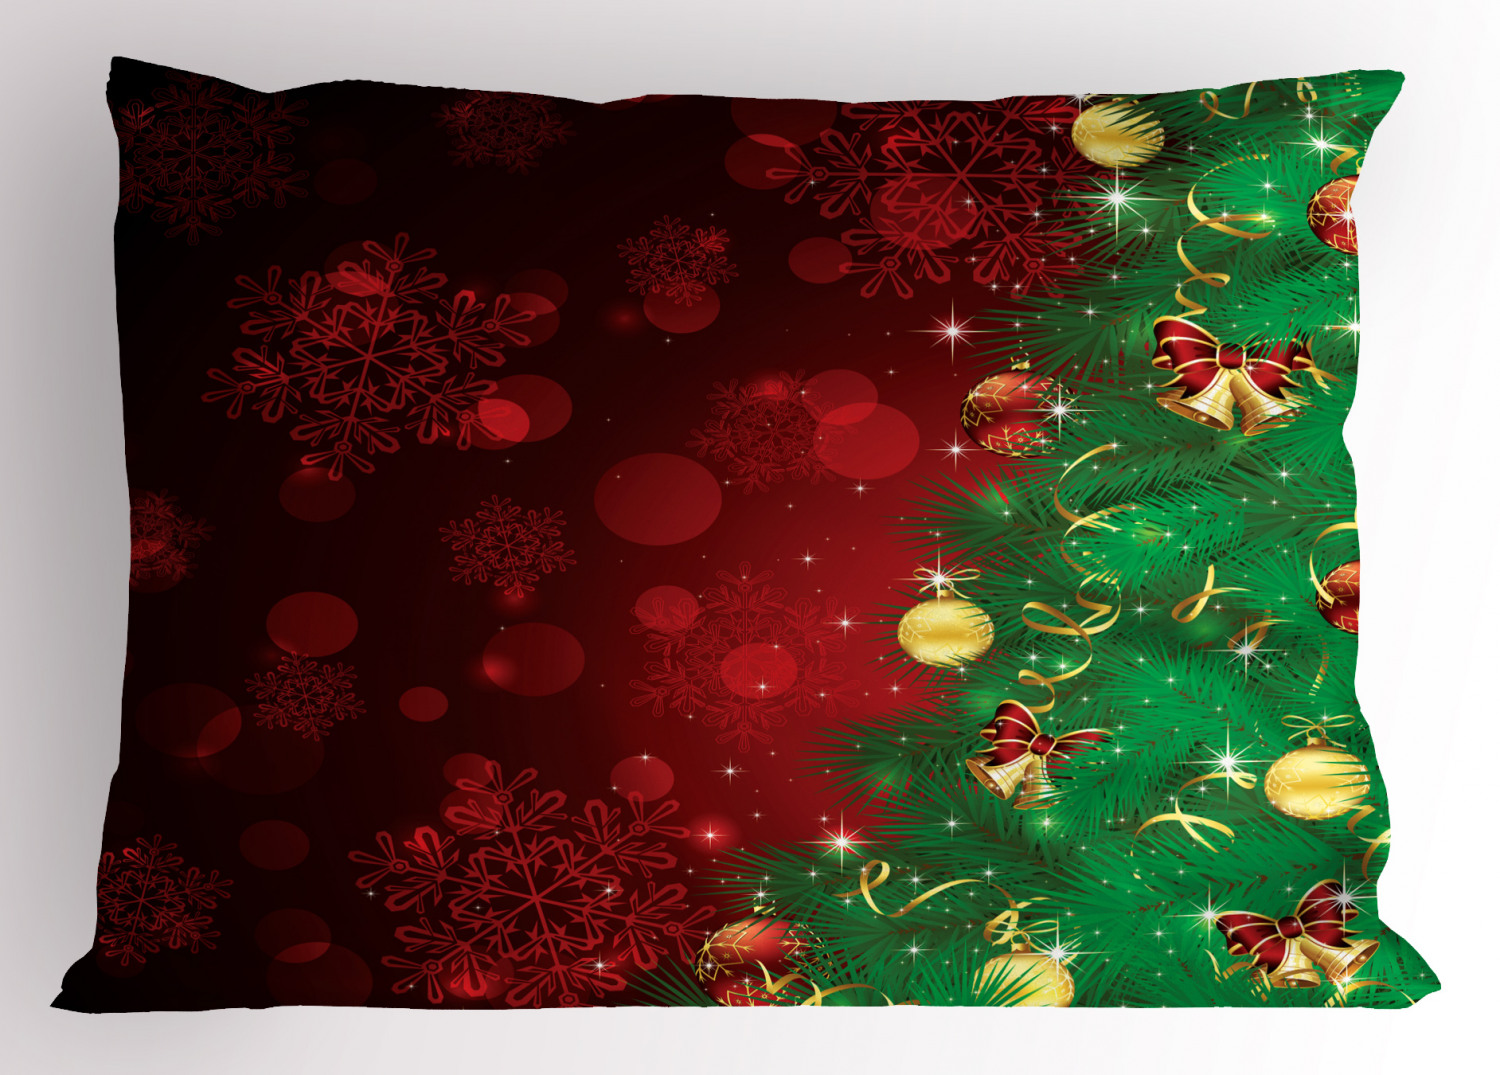 Festive Christmas Pillow Sham Decorative Pillowcase 3 Sizes for Bedroom Decor 